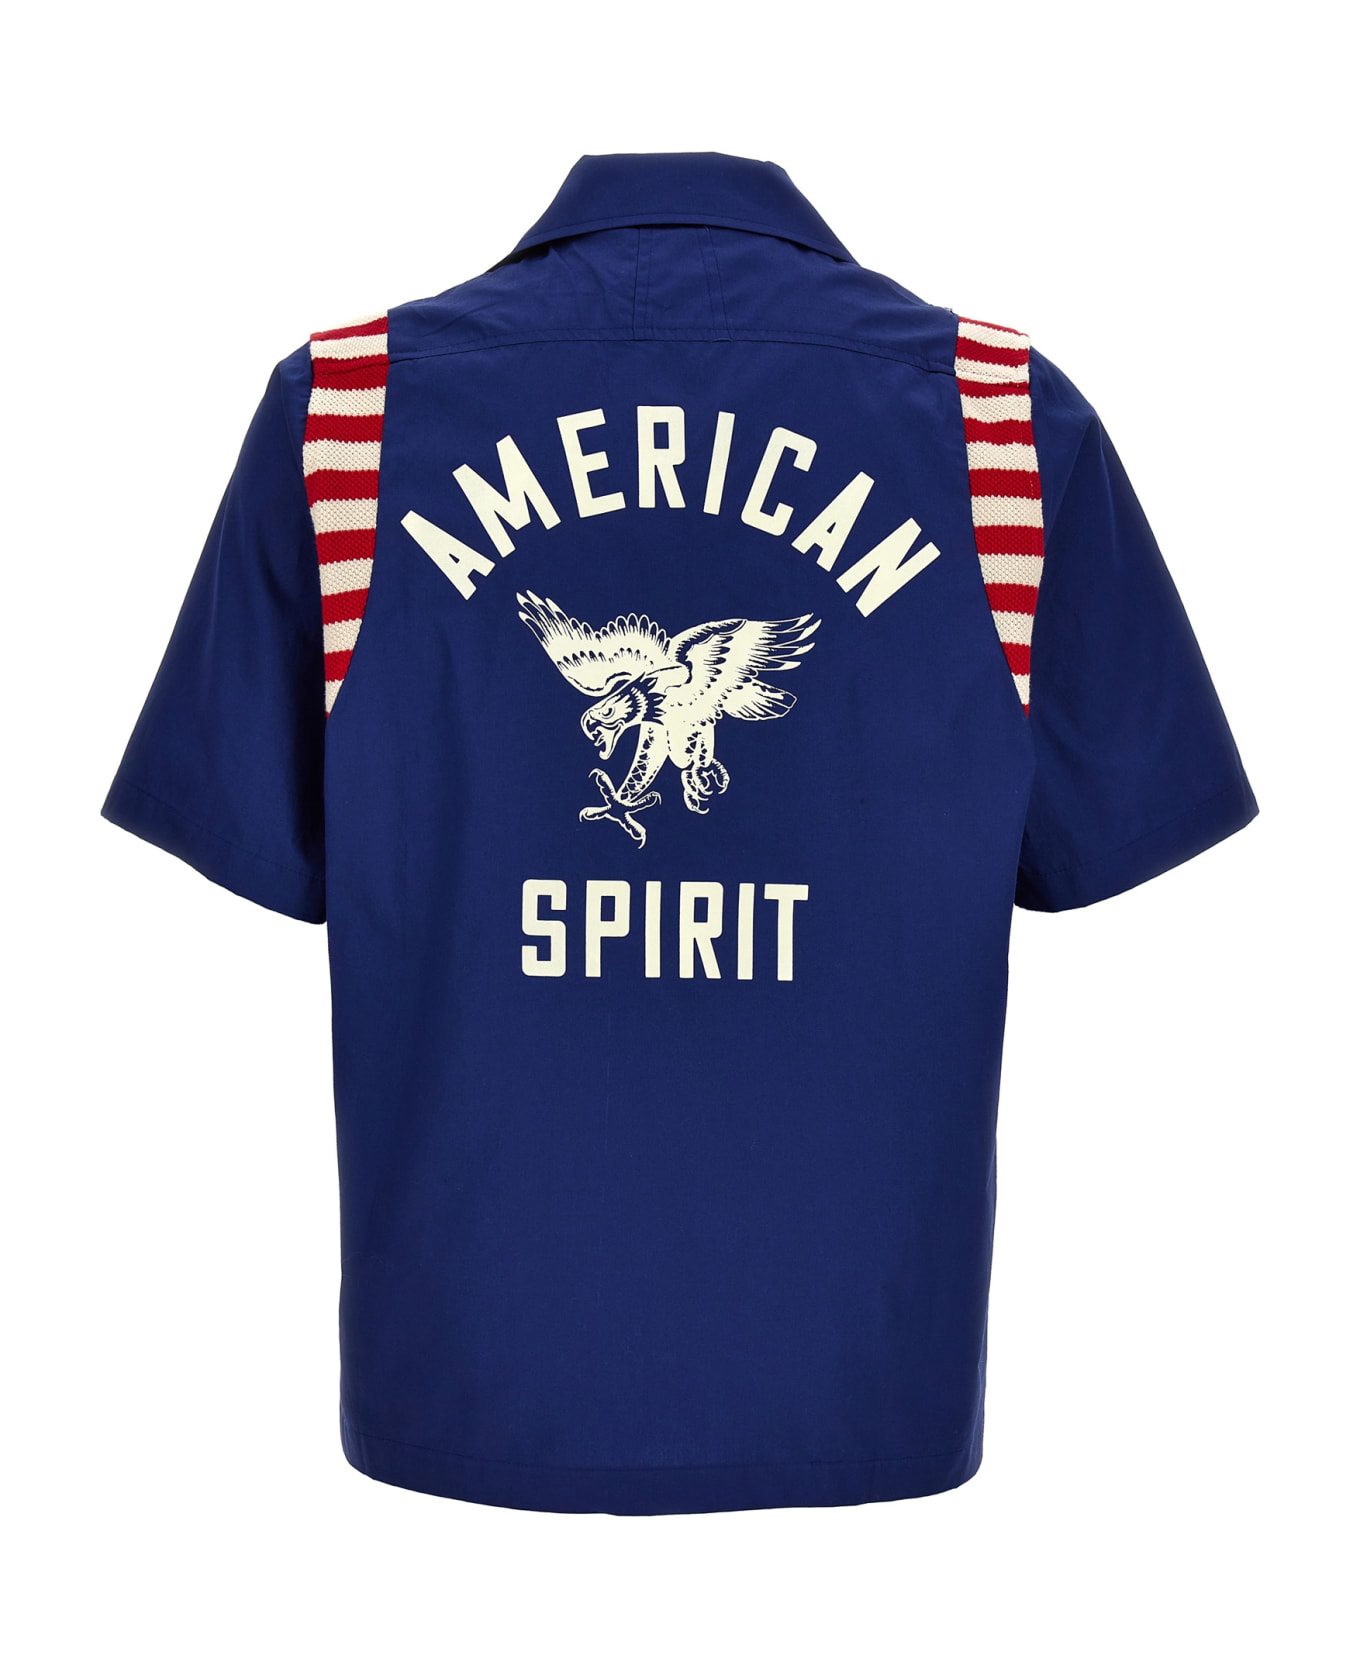 Rhude 'american Spirit' Shirt - Blue